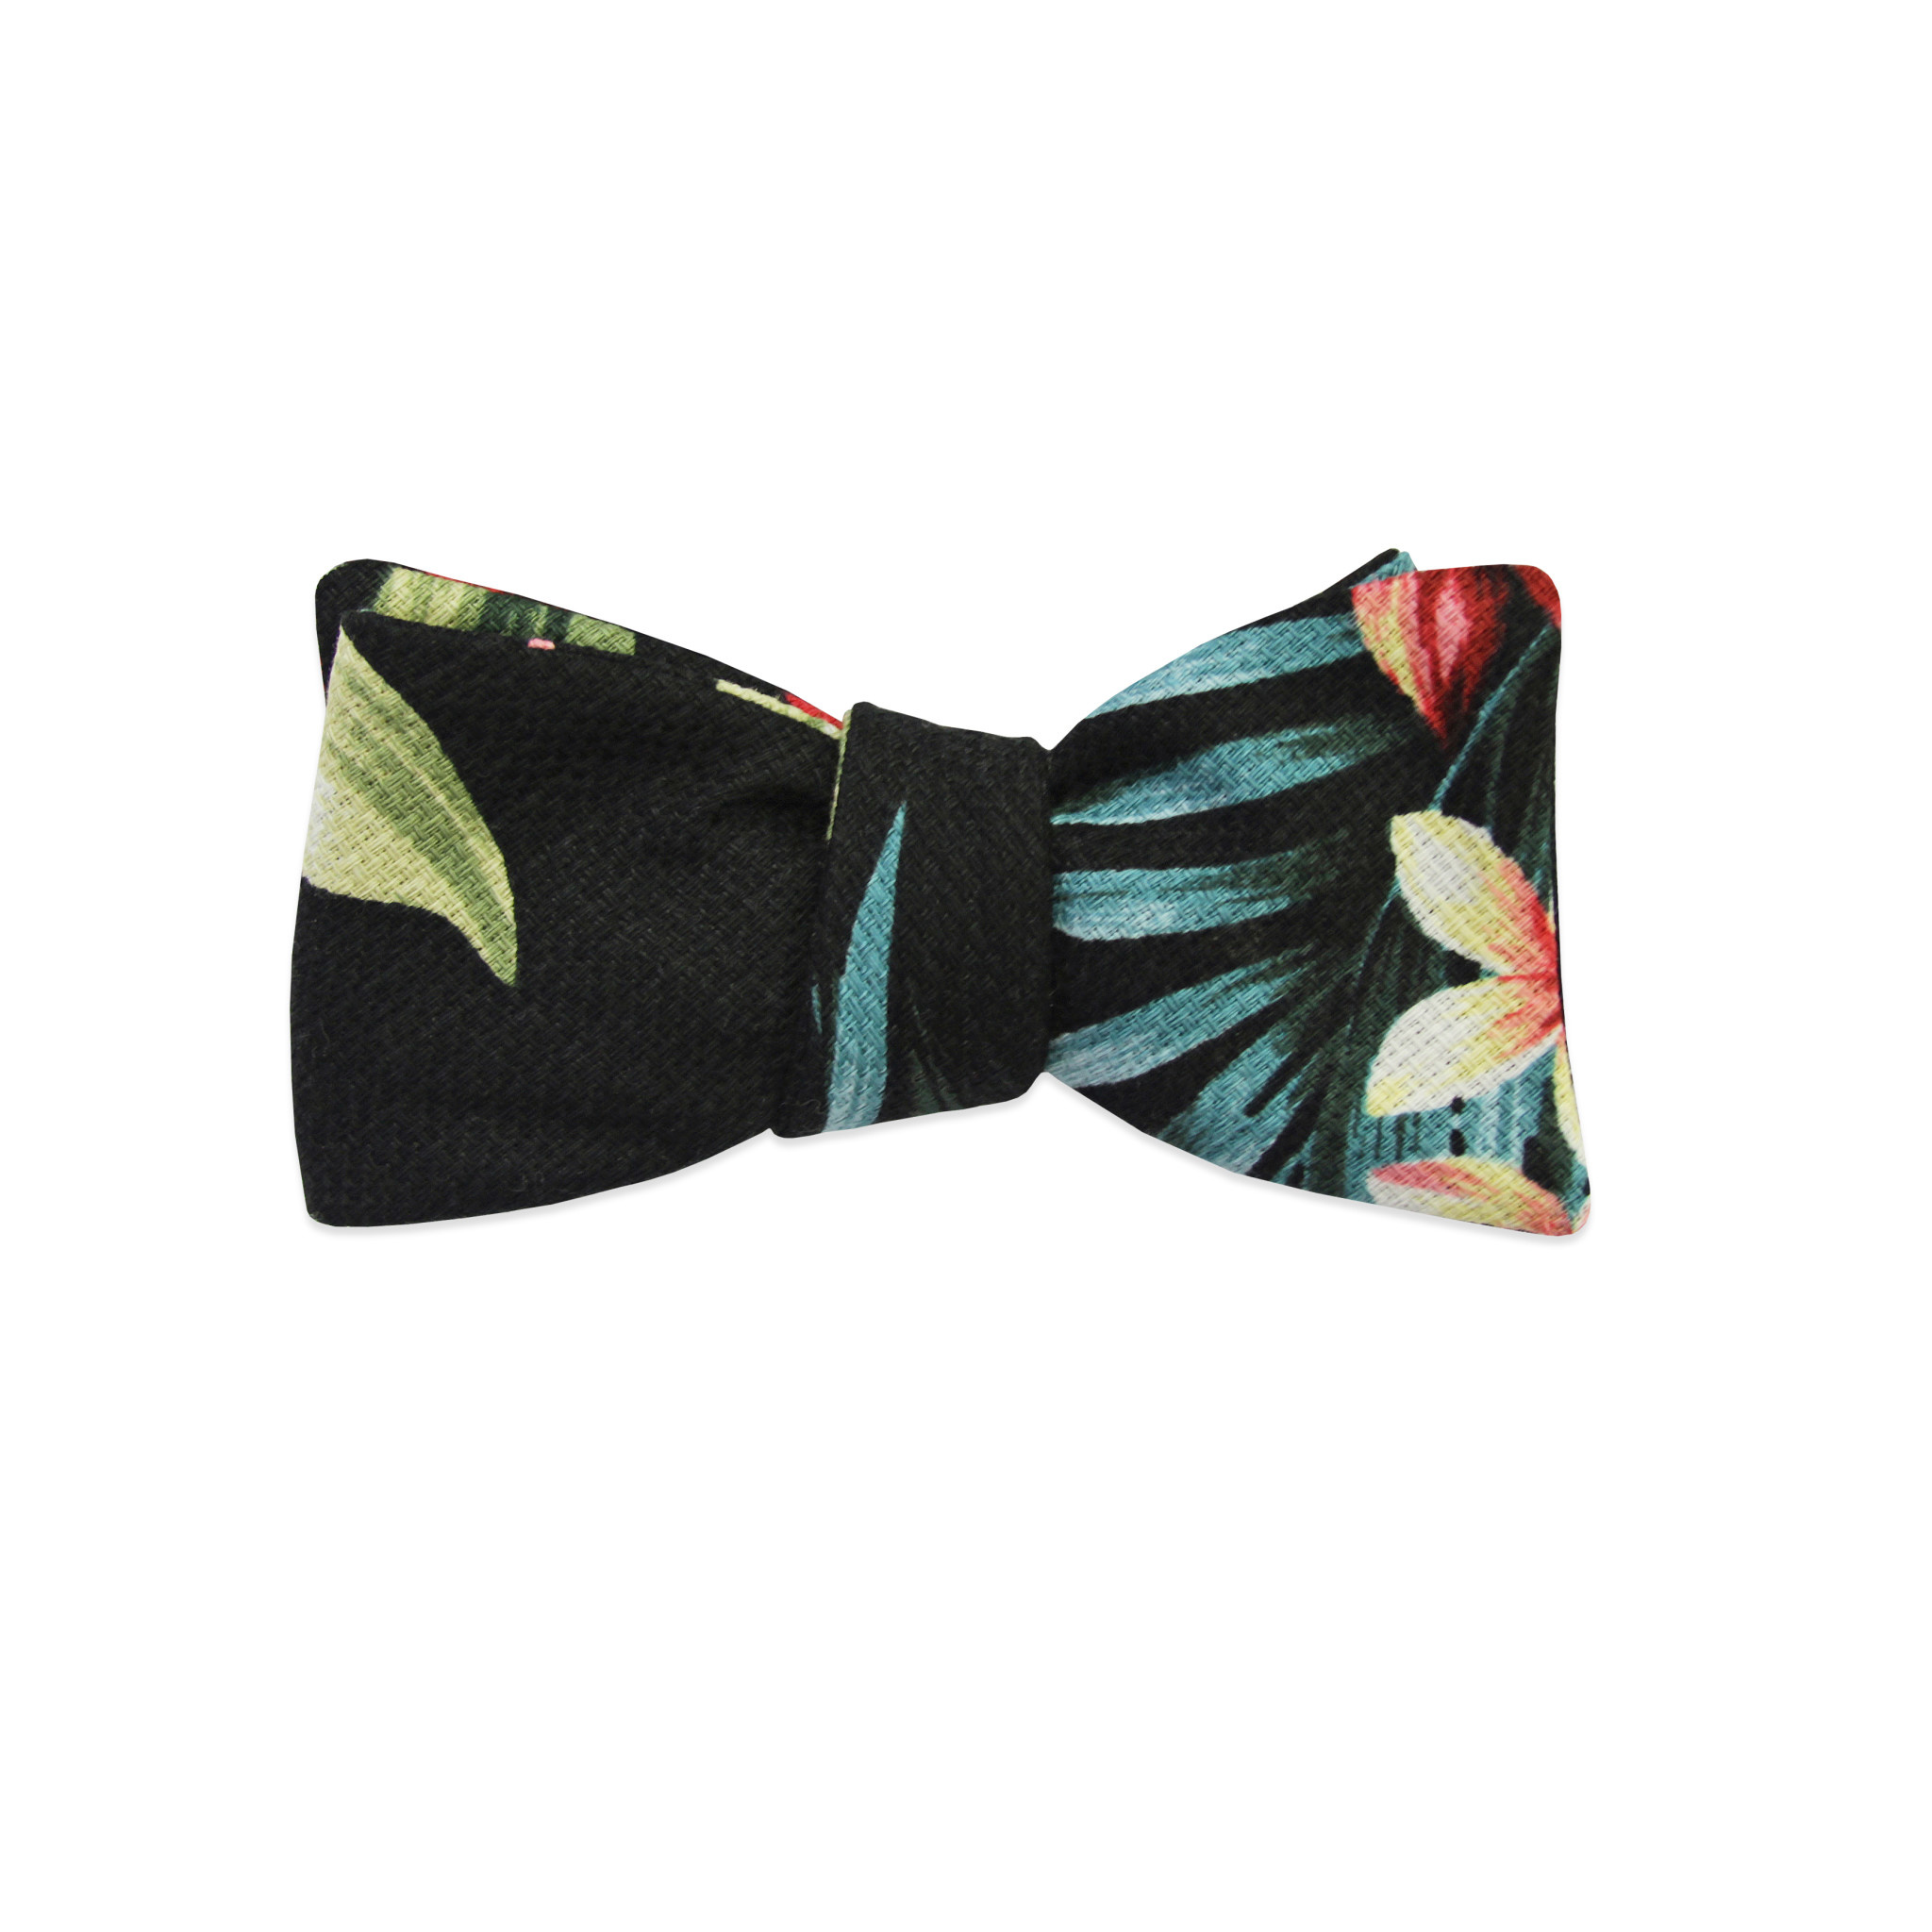 The Kalea Black Tropical Bow Tie | Pocket Square Clothing - Pocket ...